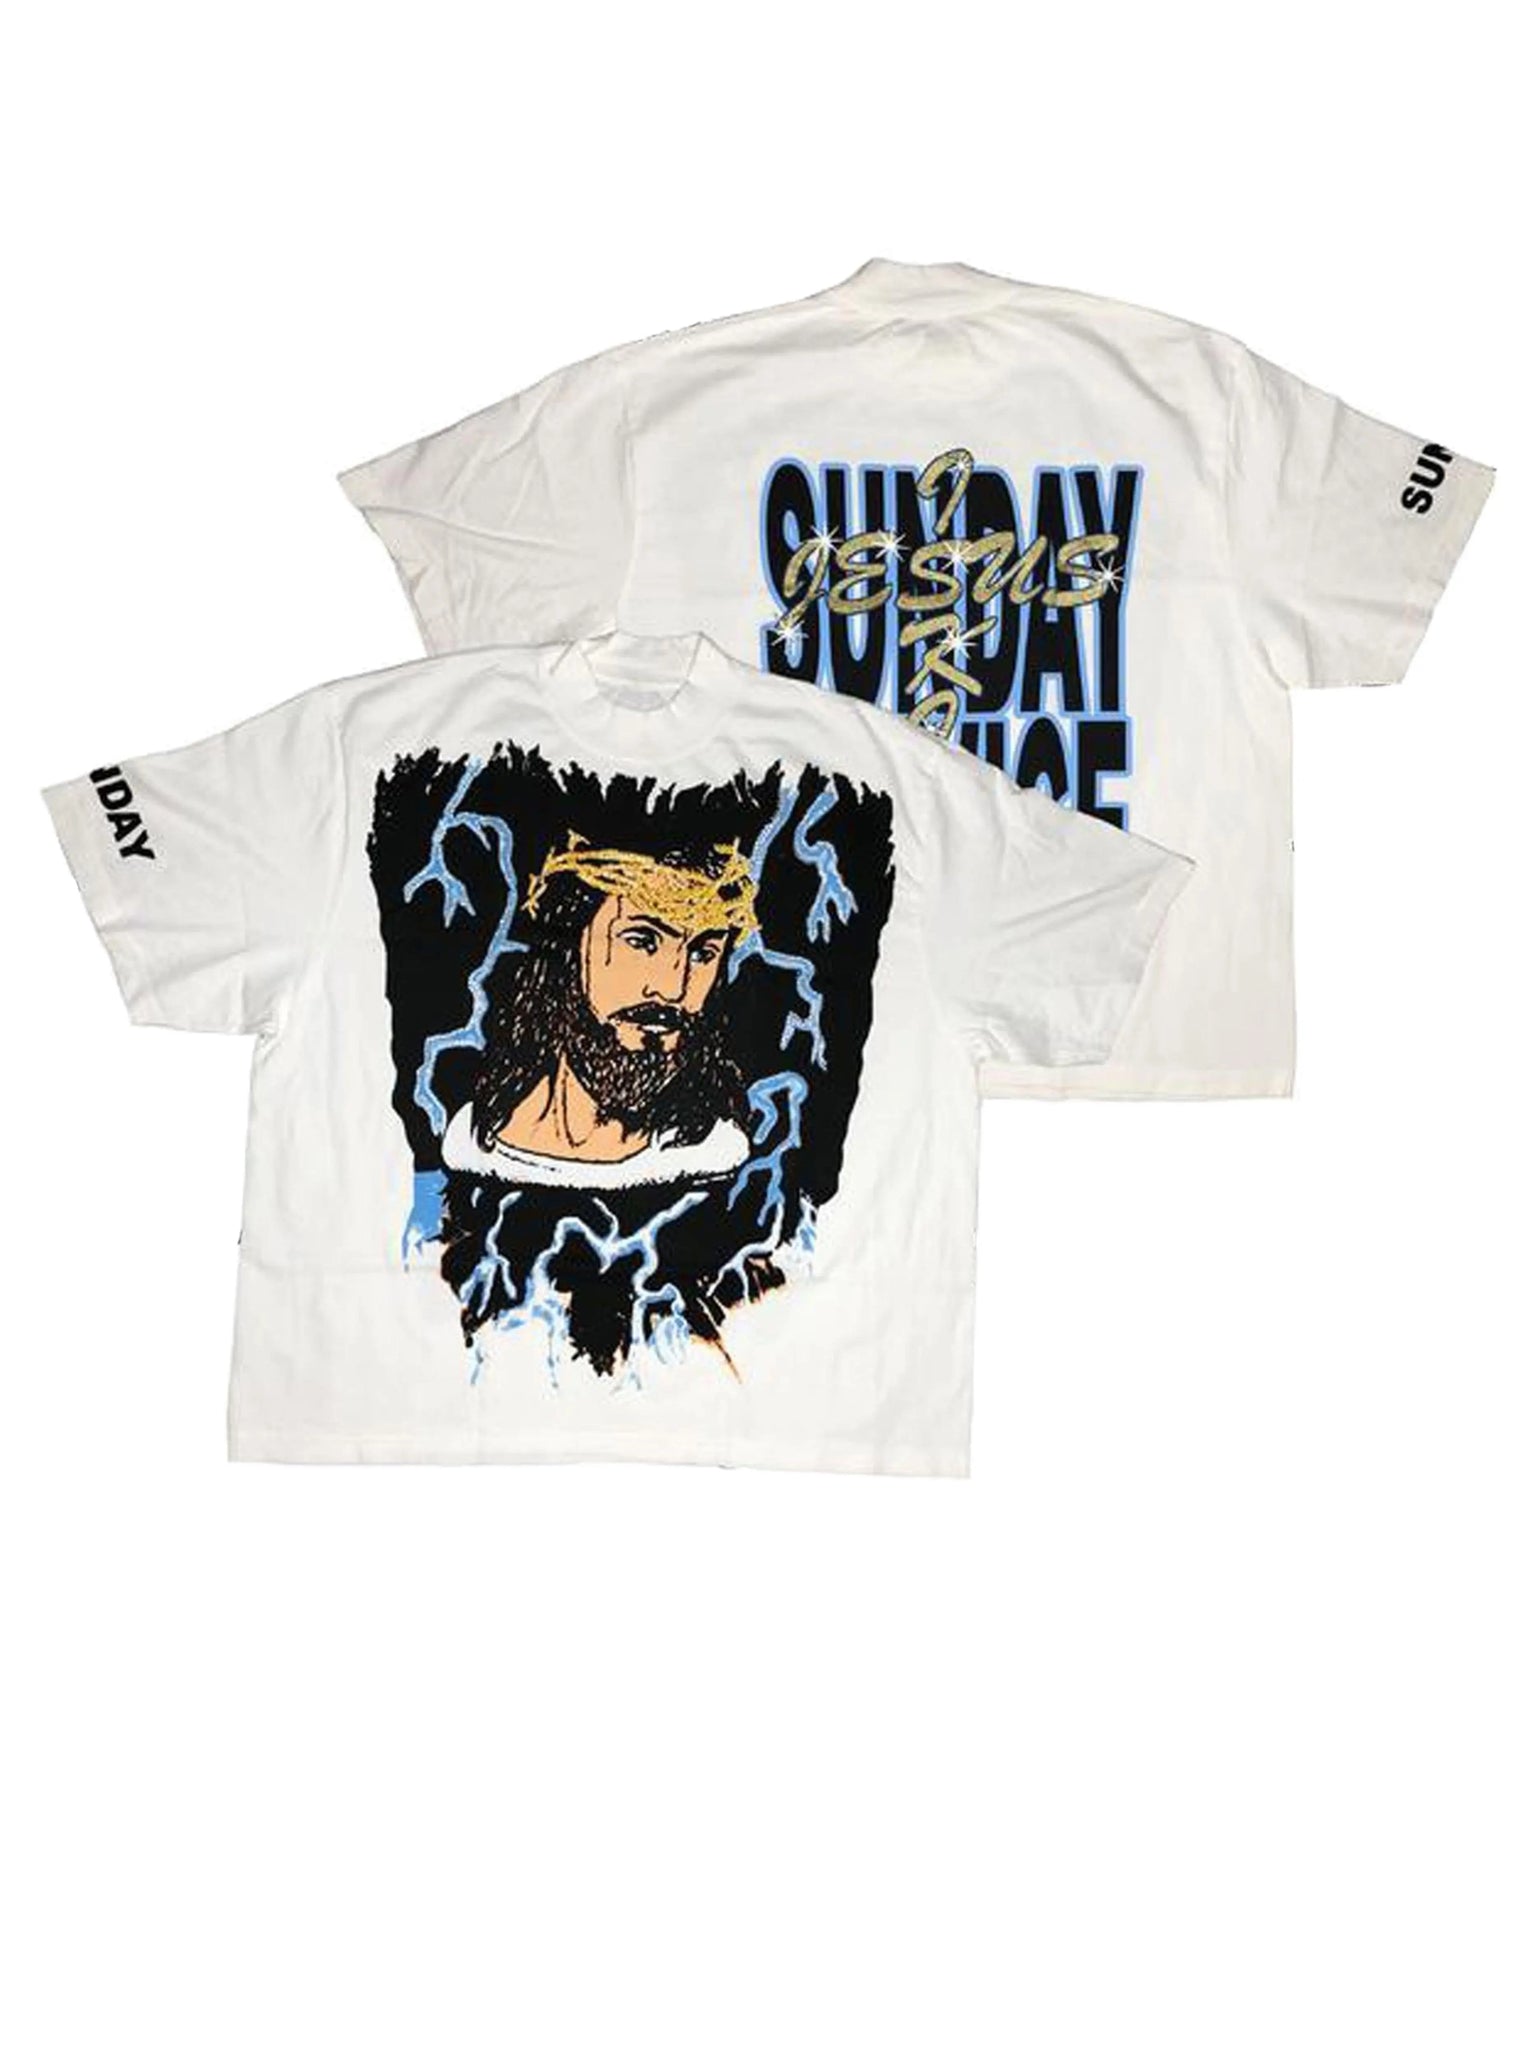 Kanye West AWGE For JIK Lightning T-Shirt Multi [FW19] Prior